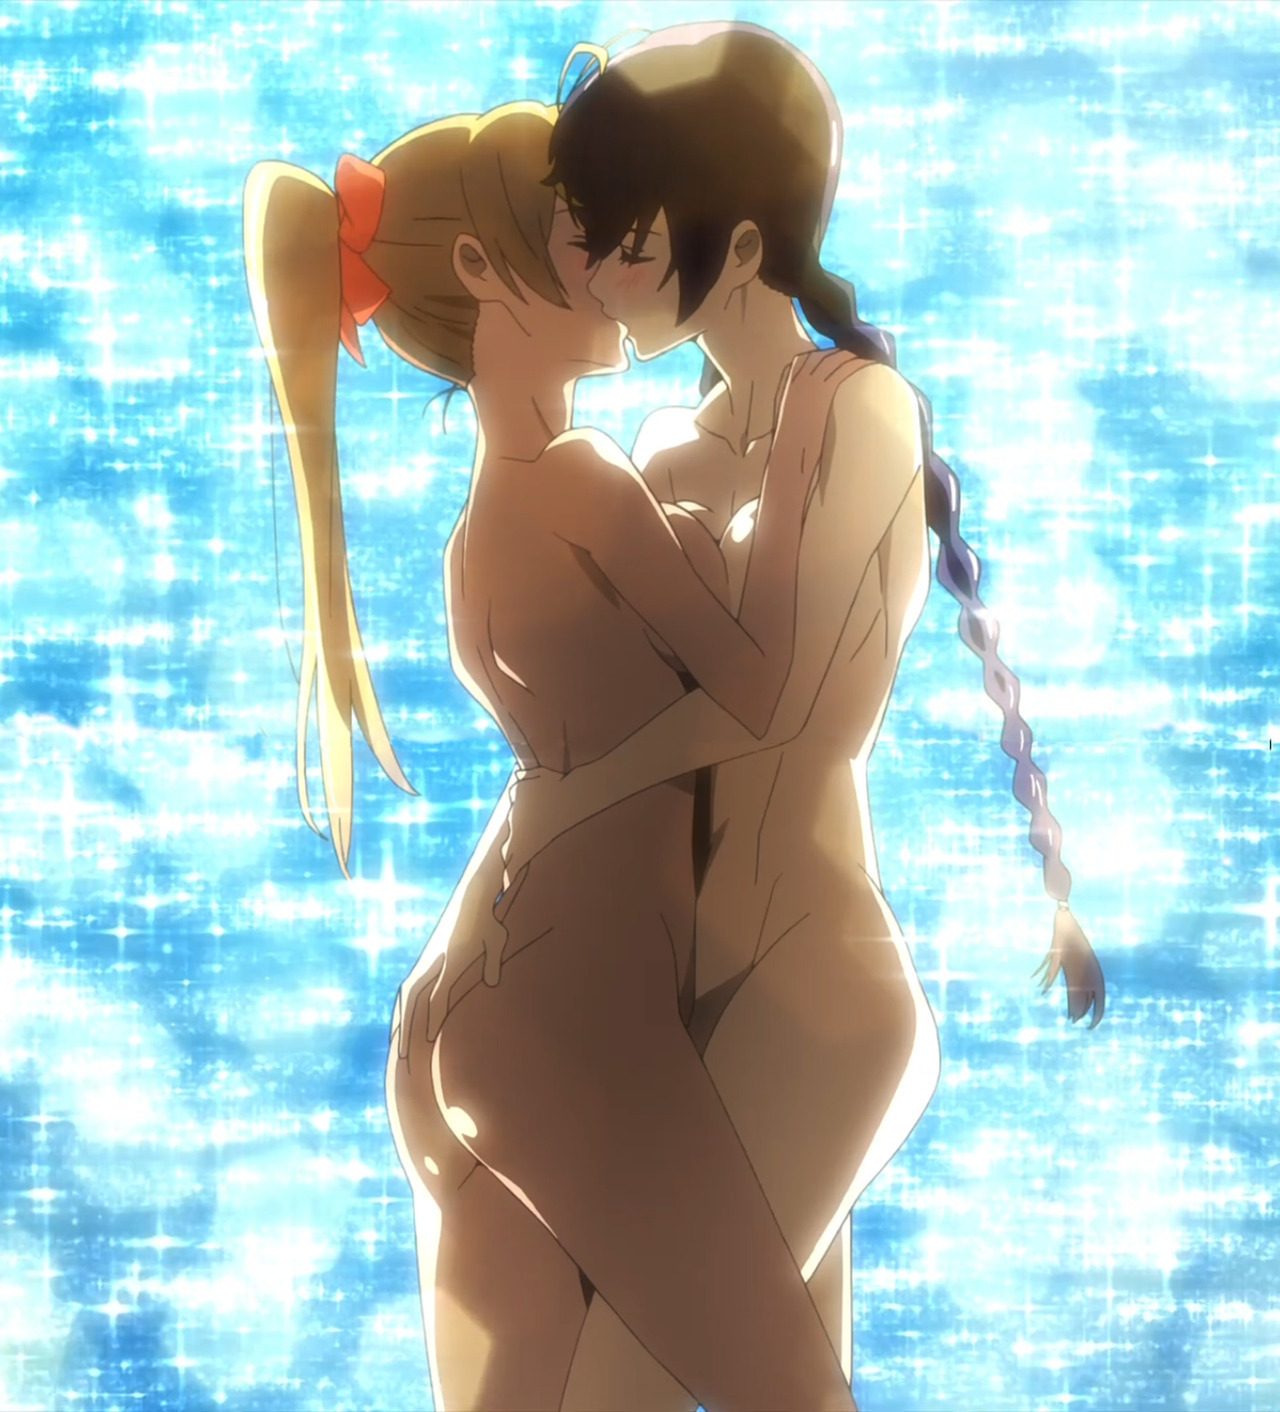 Best anime kiss scenes